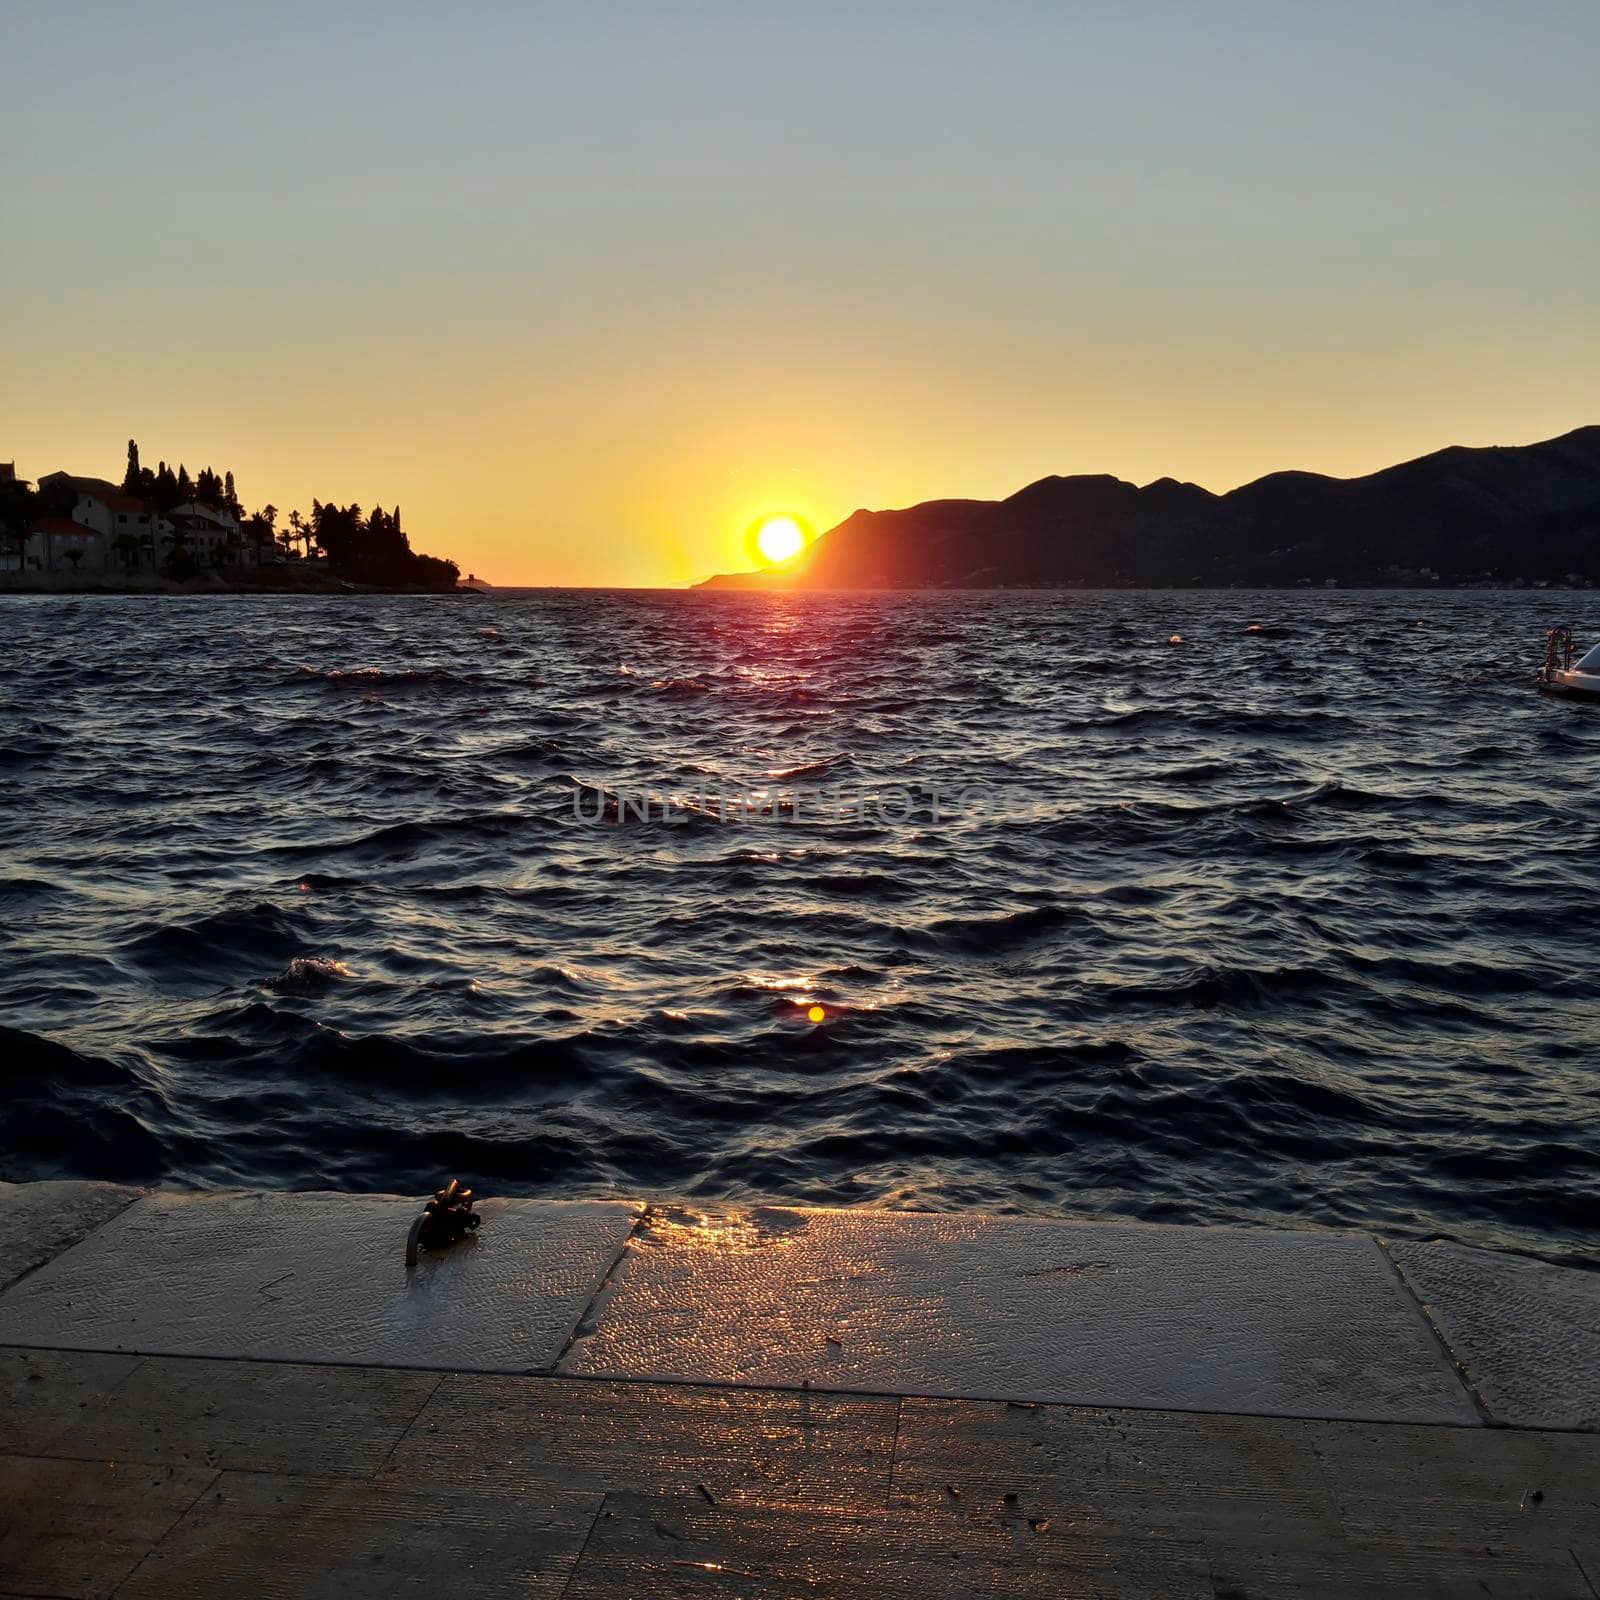 Sunset At Adriatic Sea Croatia by swissChard7